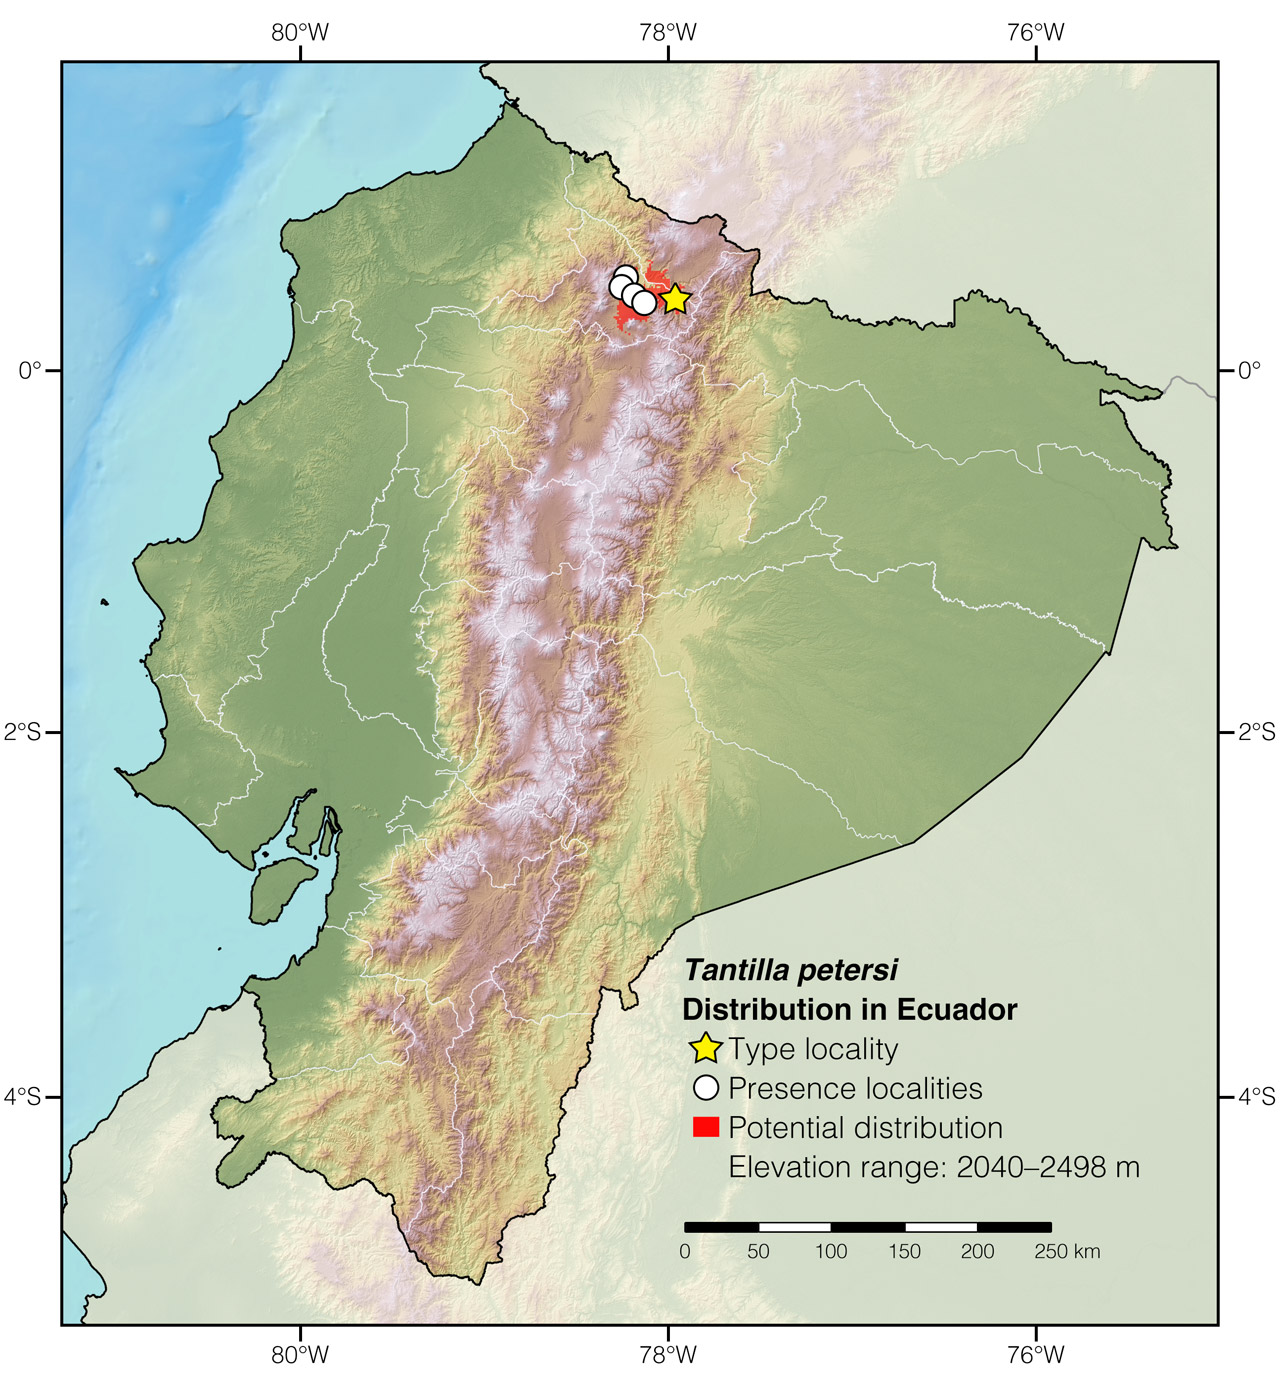 Distribution of Tantilla petersi in Ecuador